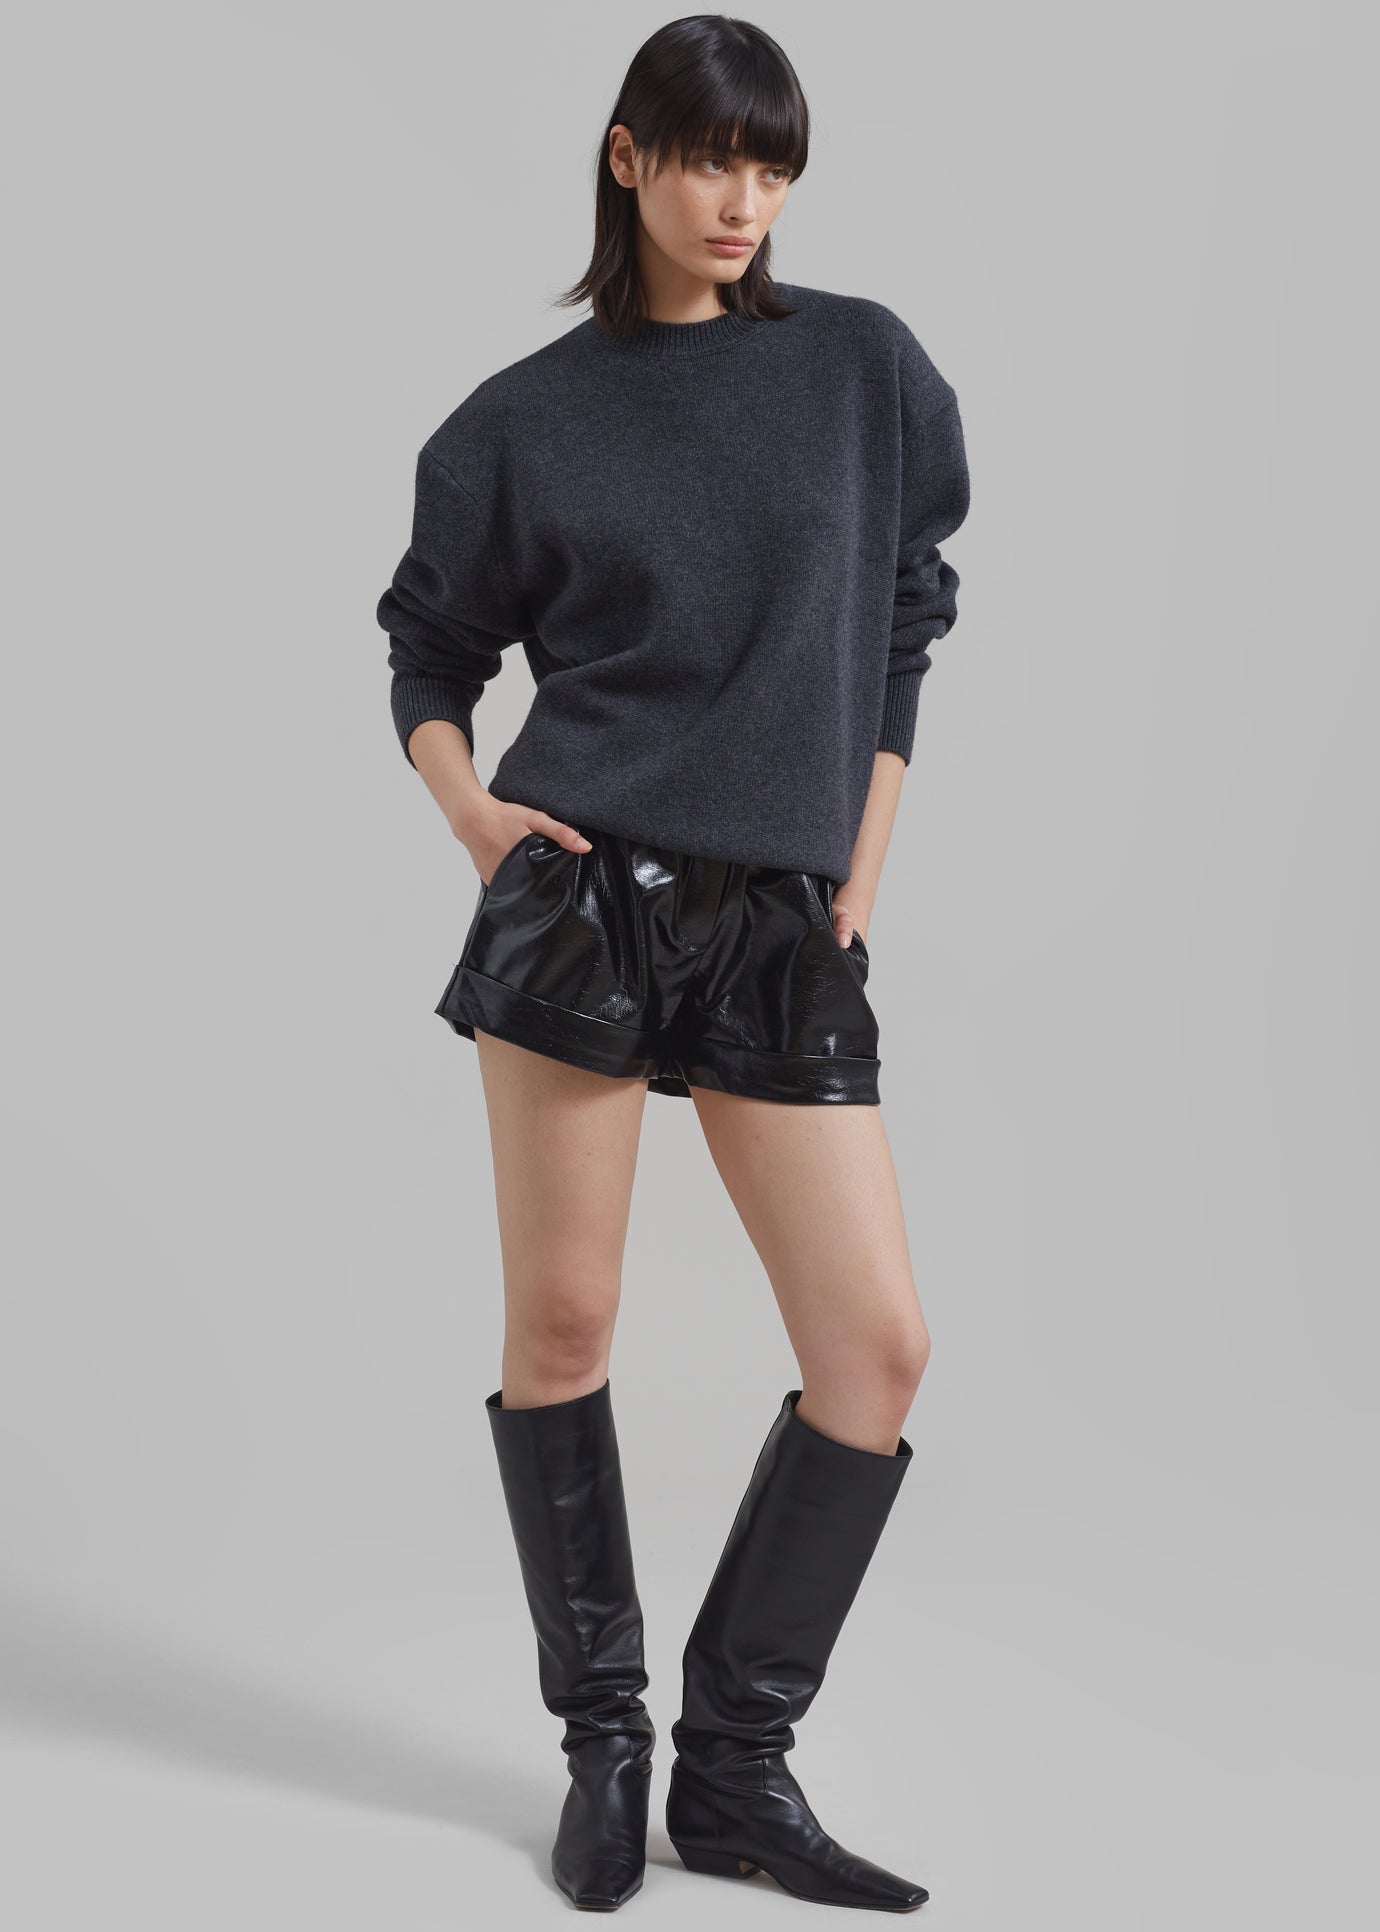 Kassy Faux Leather Shorts - Black - 1